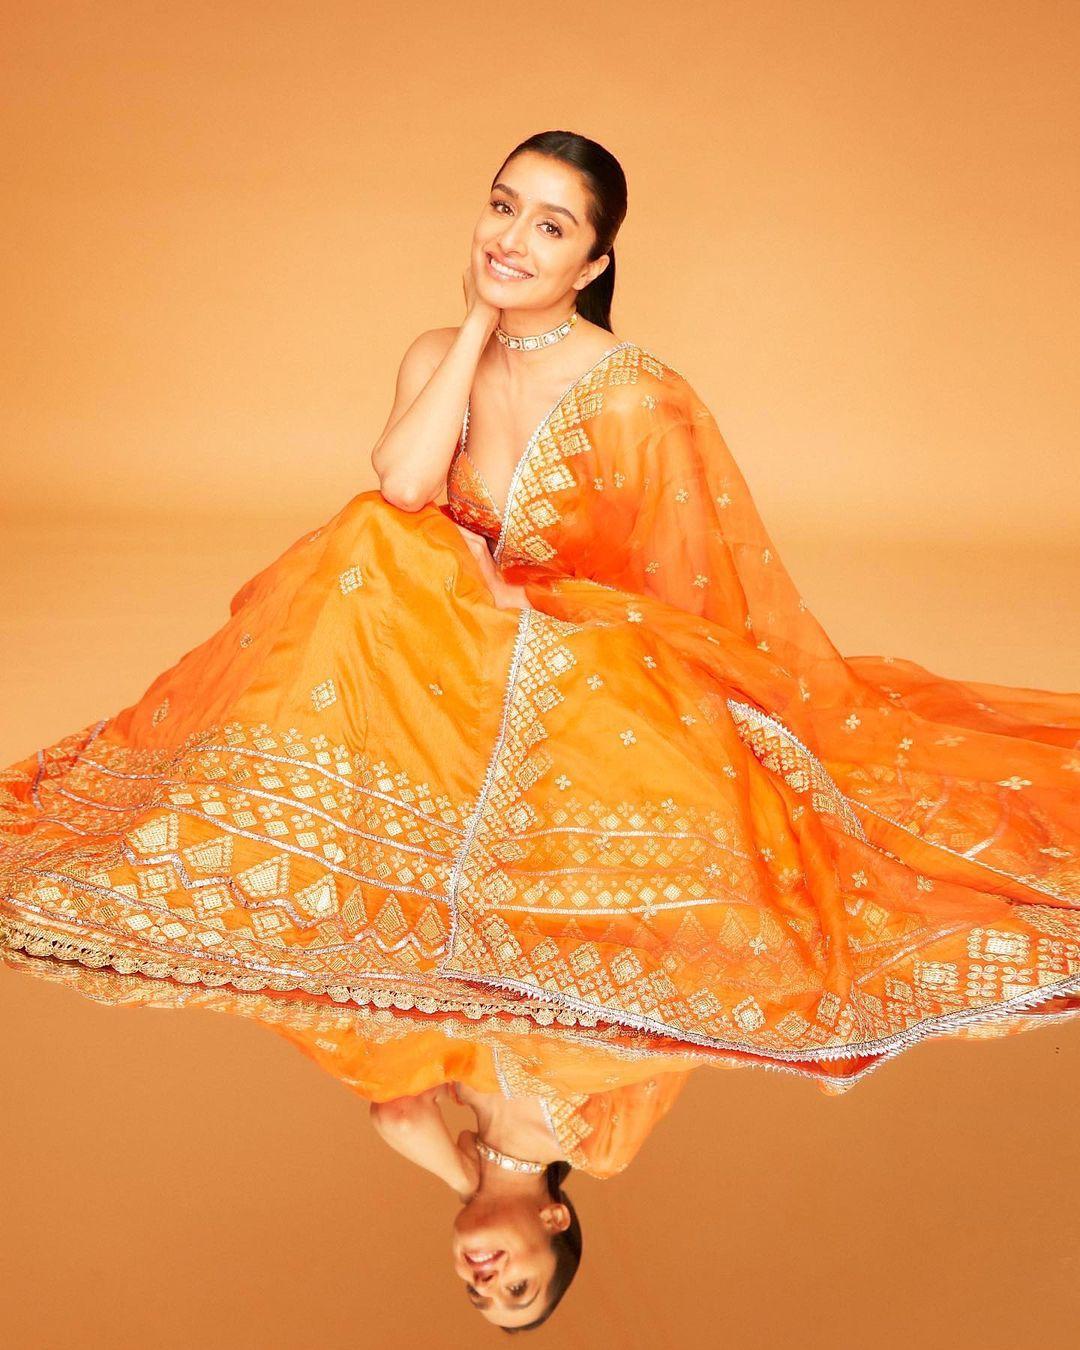 Shraddha Kapoor's choice of an orange lehenga radiates festive charm. The vibrant hue captures the spirit of celebration, while her elegant ensemble reflects a seamless blend of traditional and modern elements.